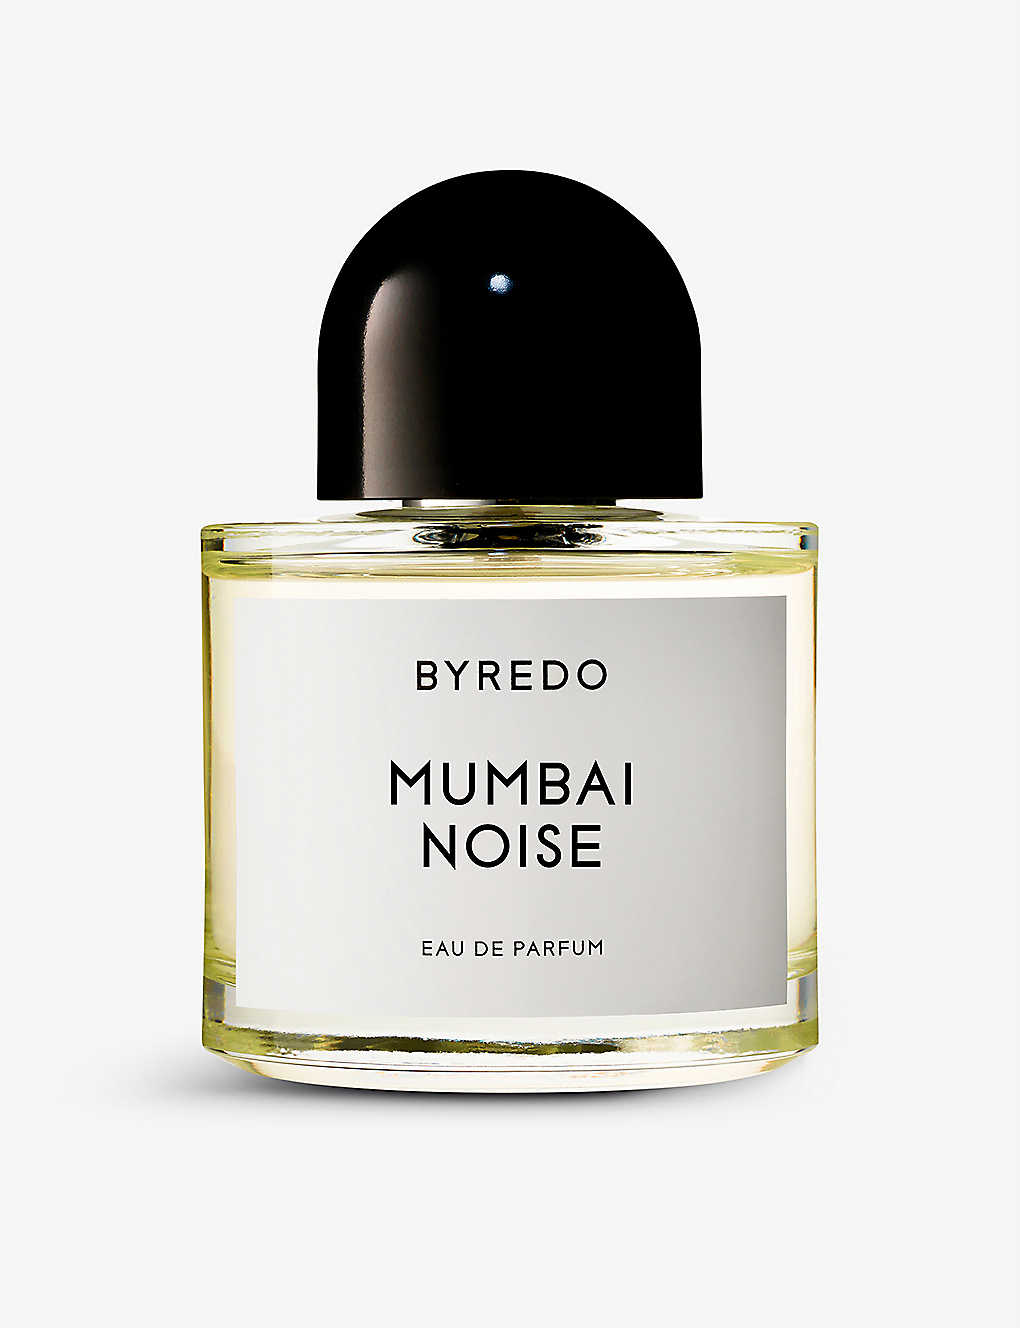 BYREDO Mumbai Noise Eau de Parfum Samples